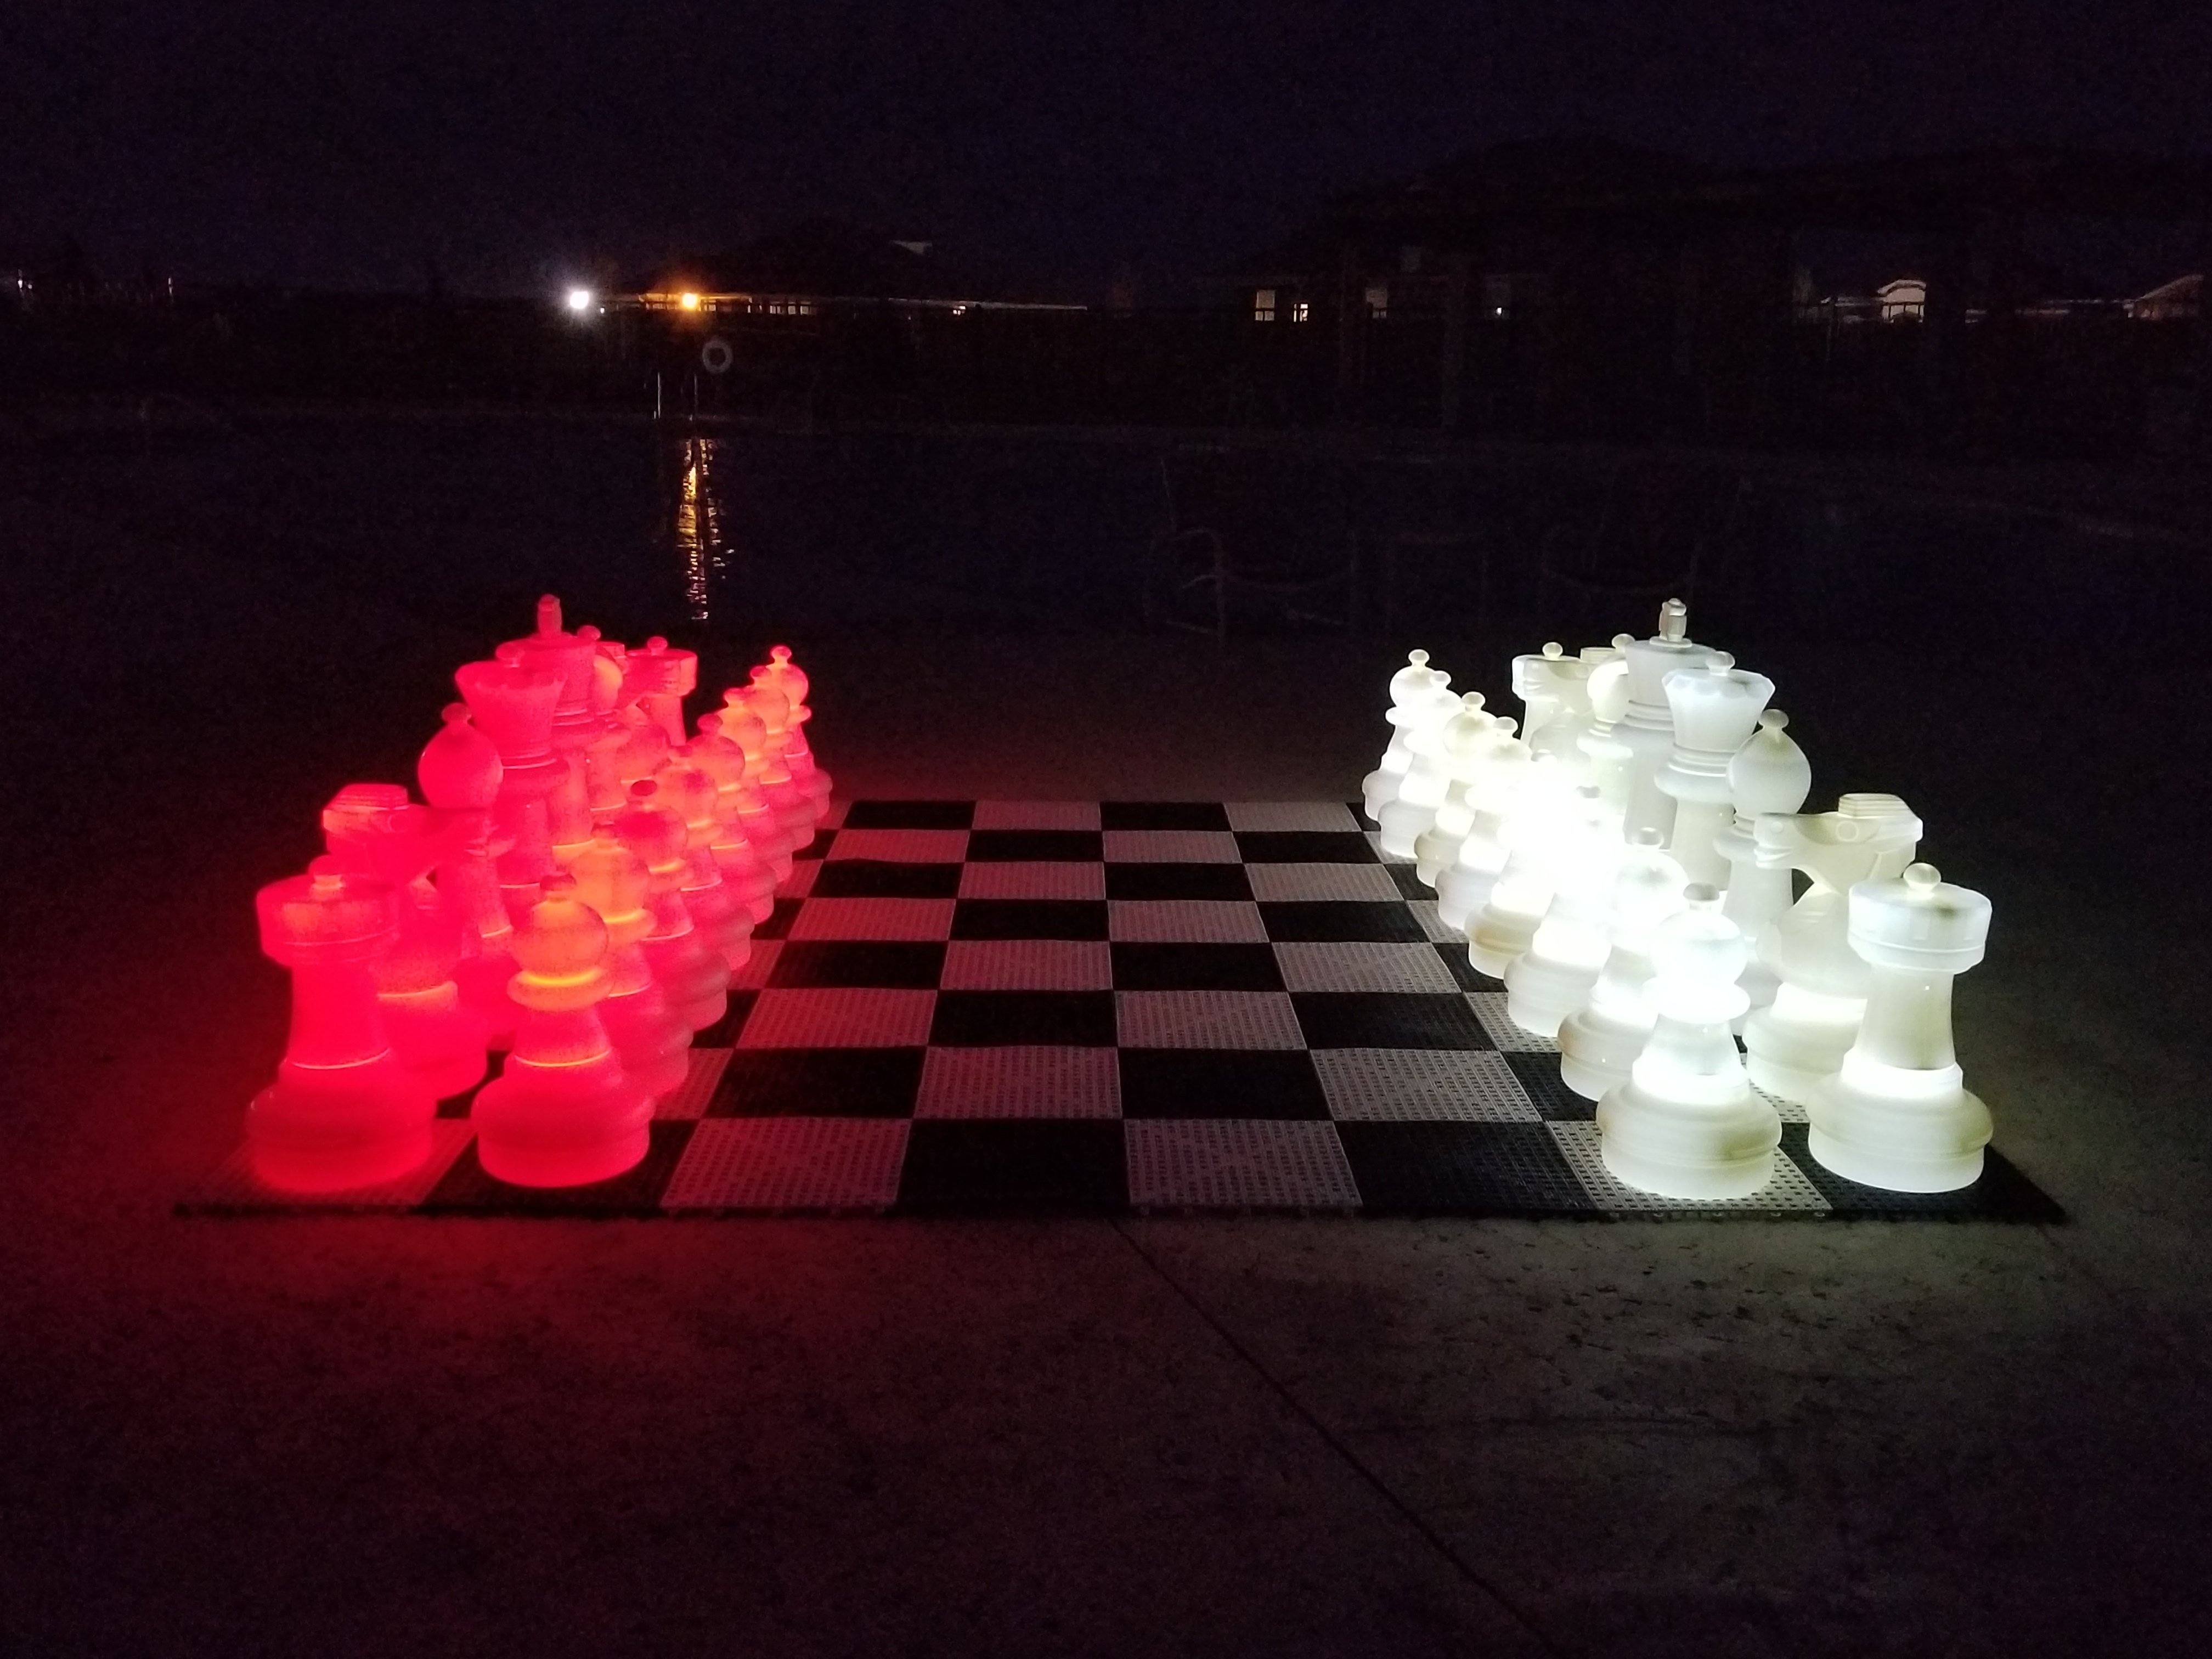 MegaChess 25 Tall Light-Up Giant Chess Set - Day/Night Set - White Side  Illuminates Red